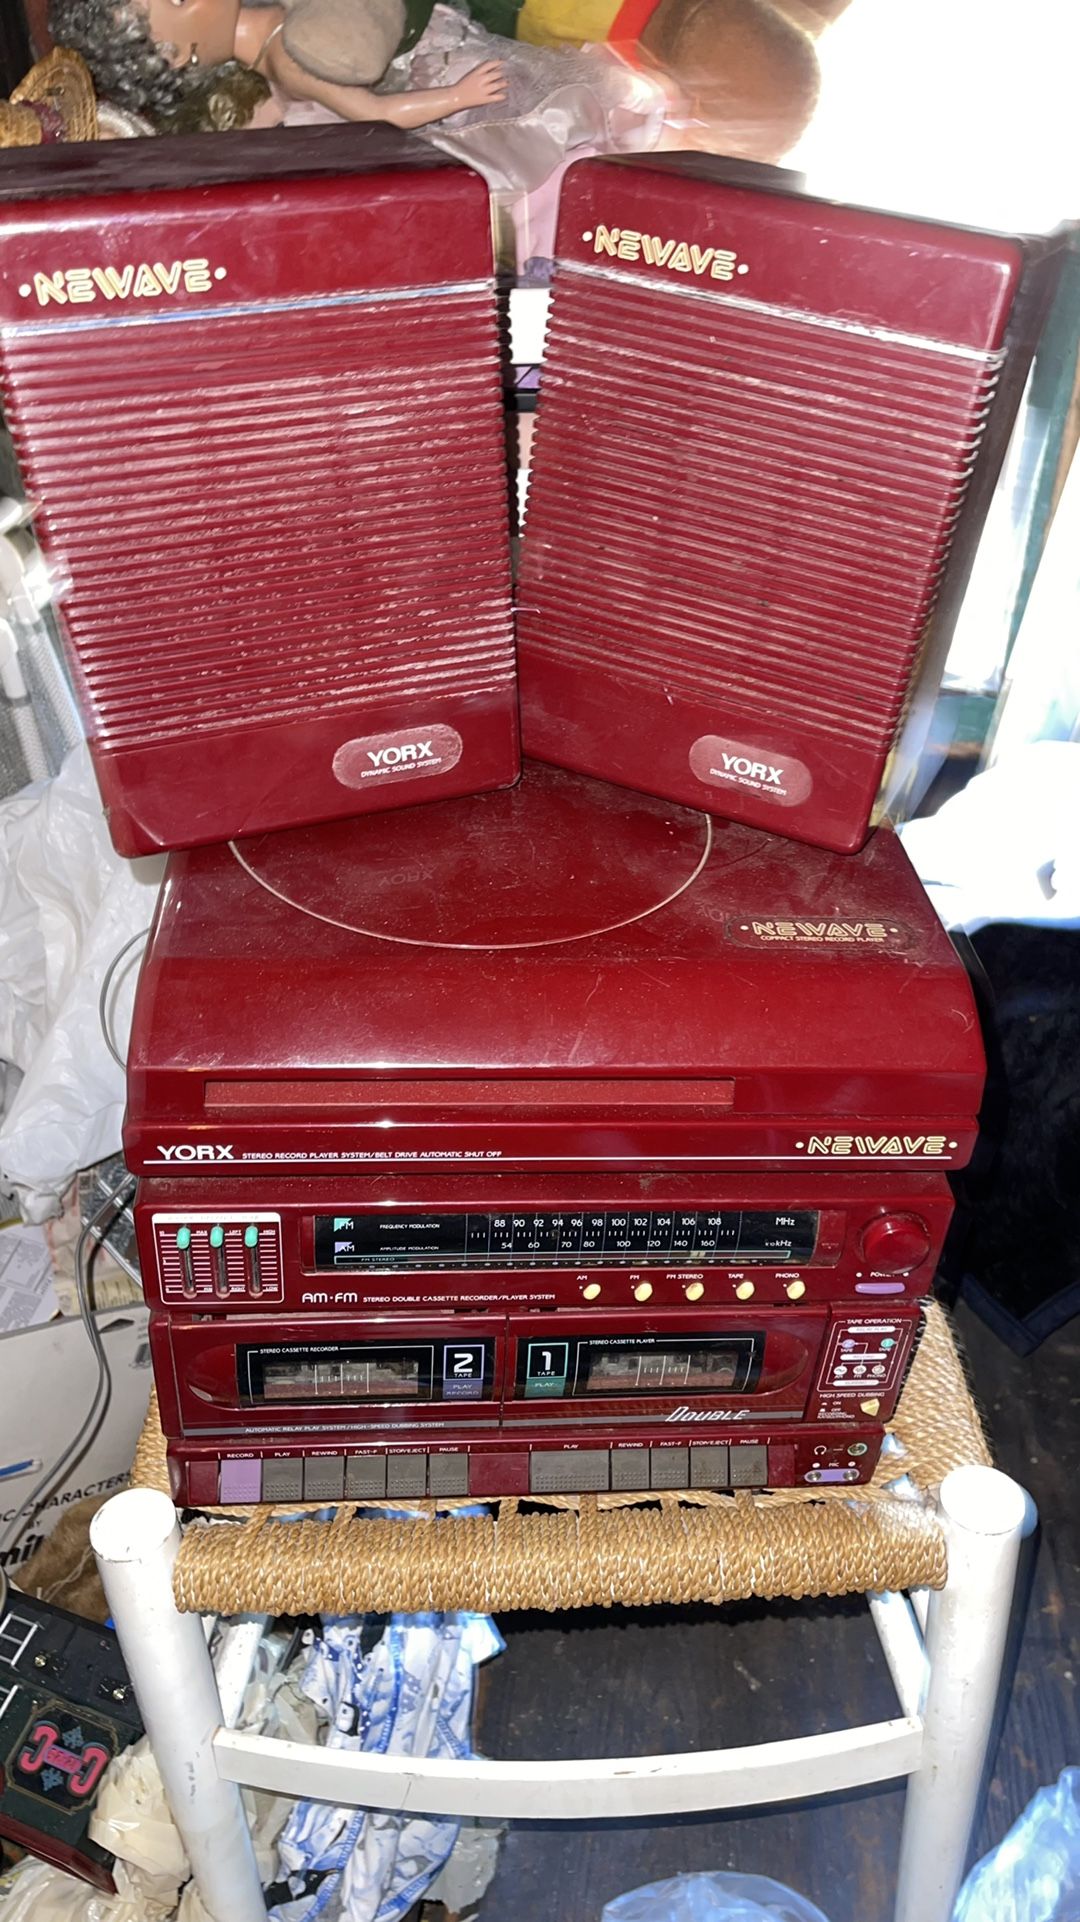 Vintage Yorx Stereo System